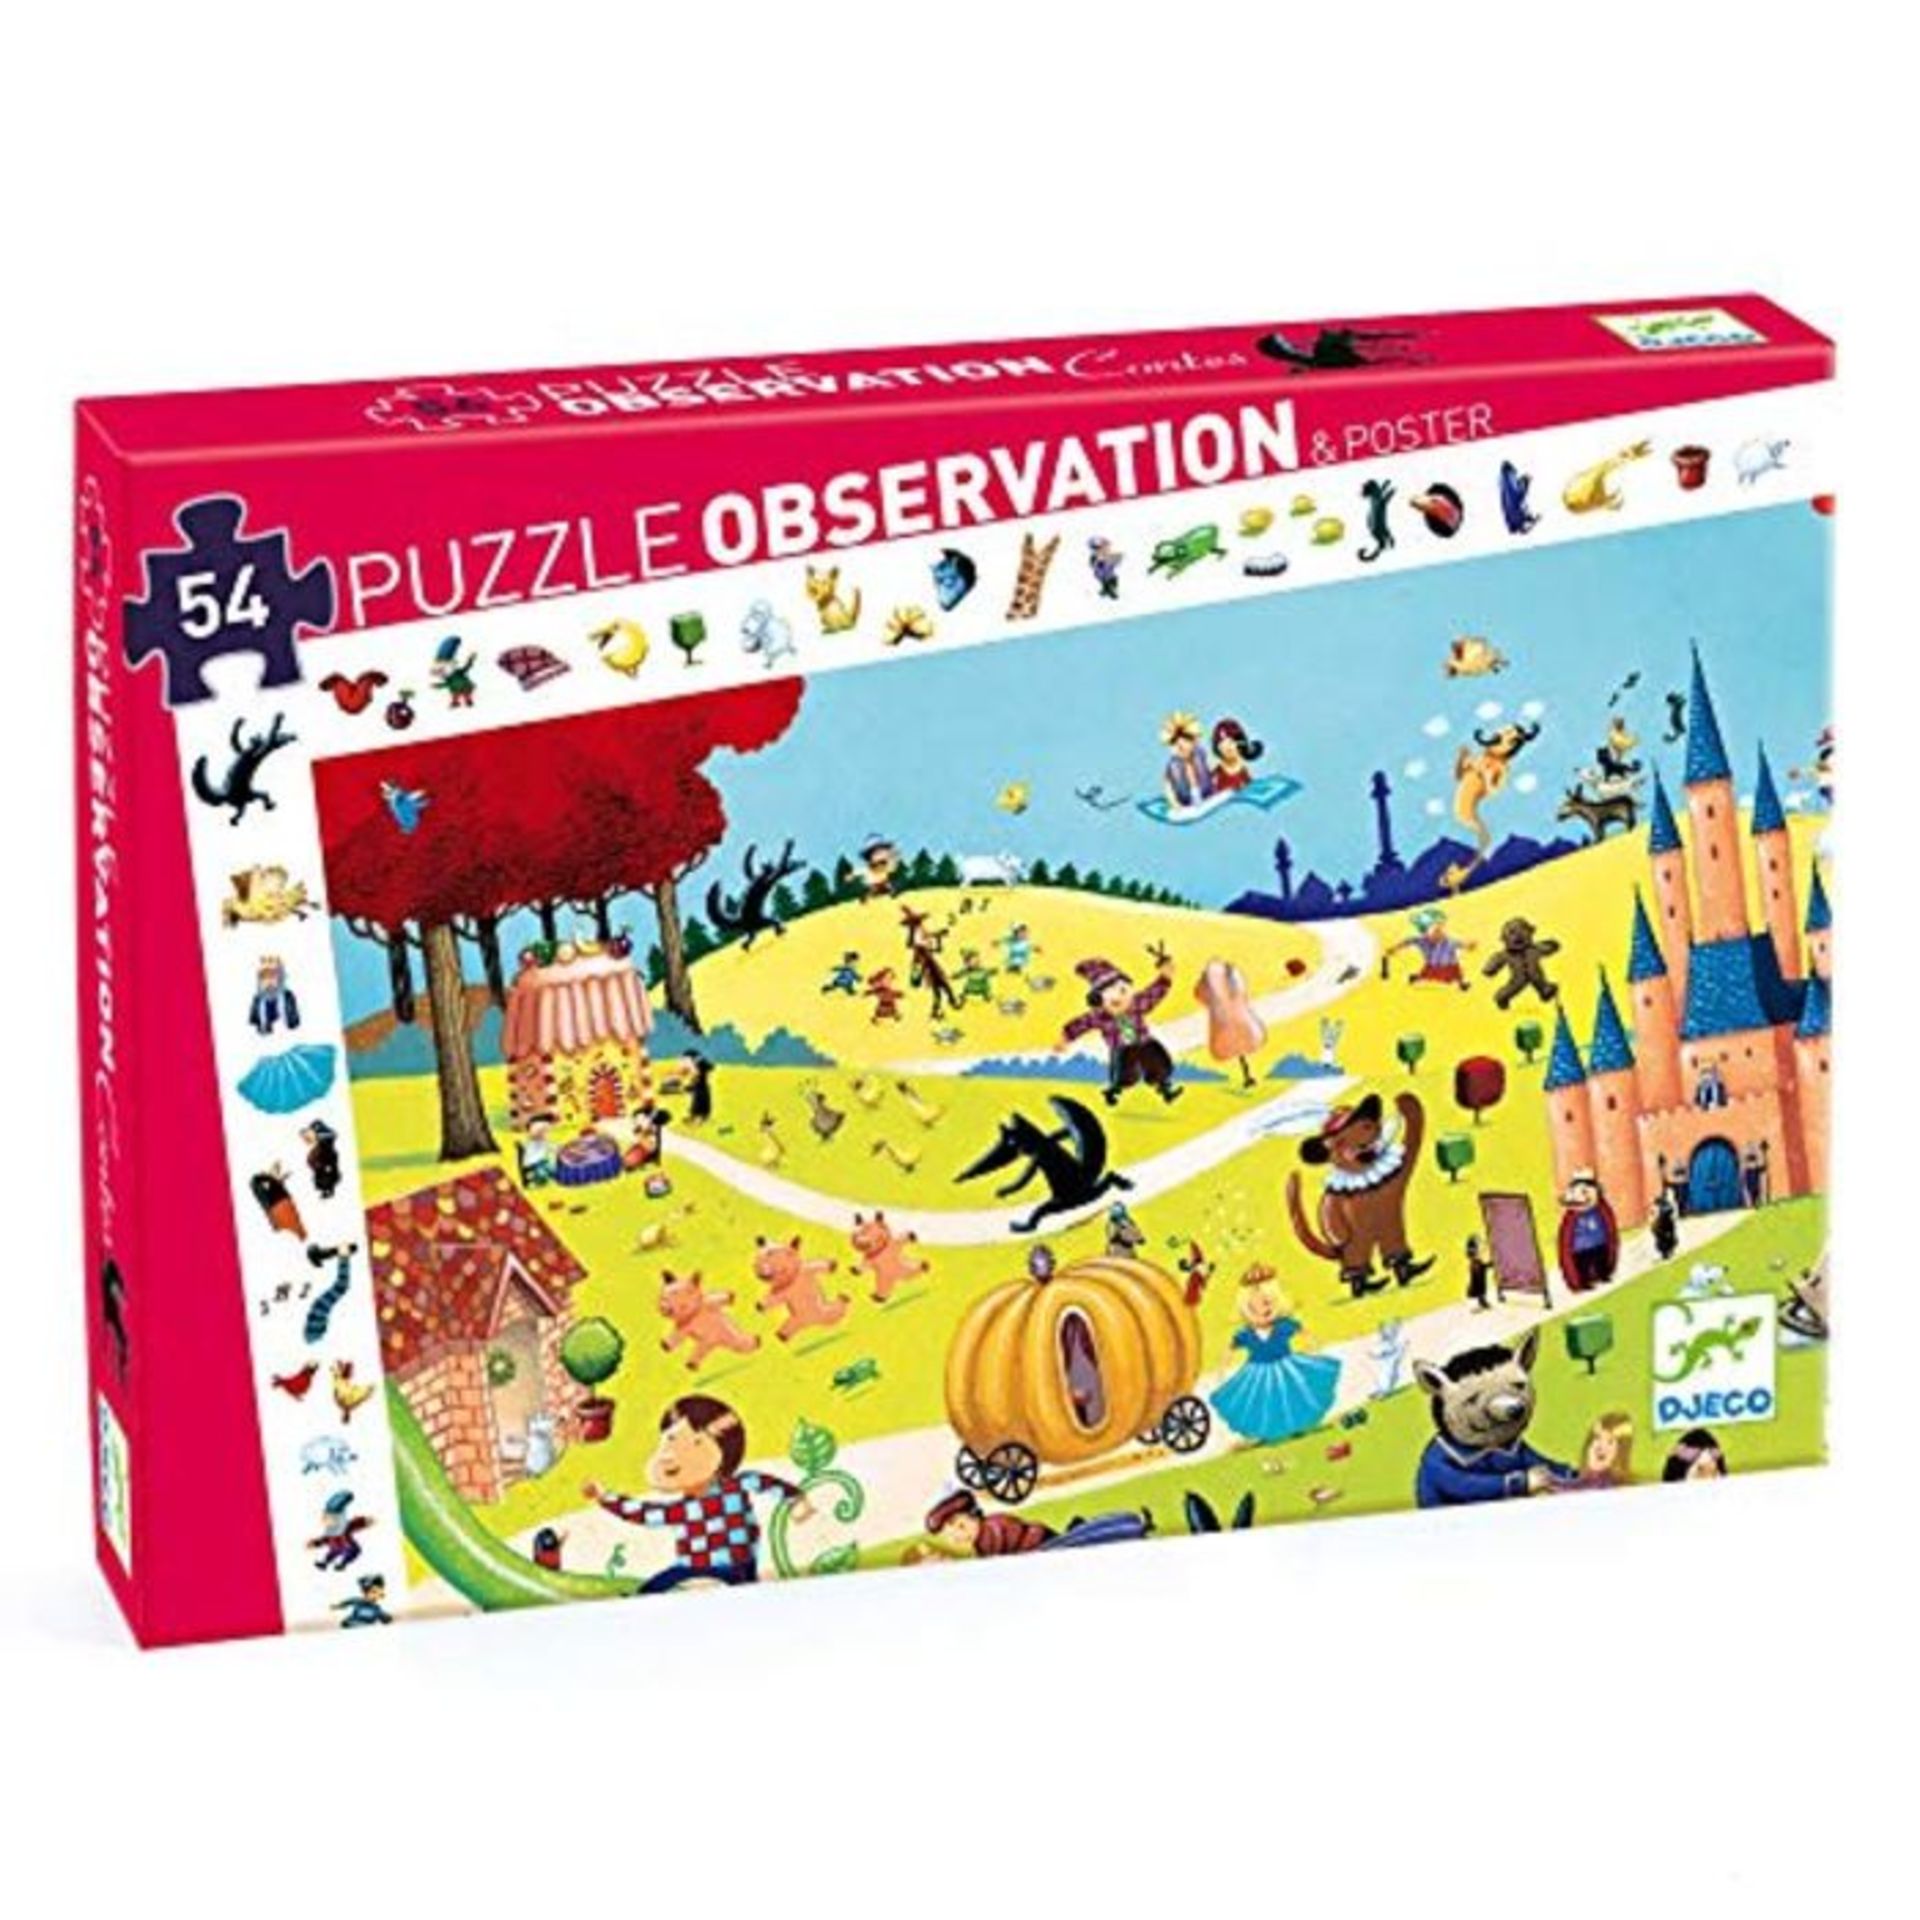 Djeco 24601 Observation Puzzles, Mixed